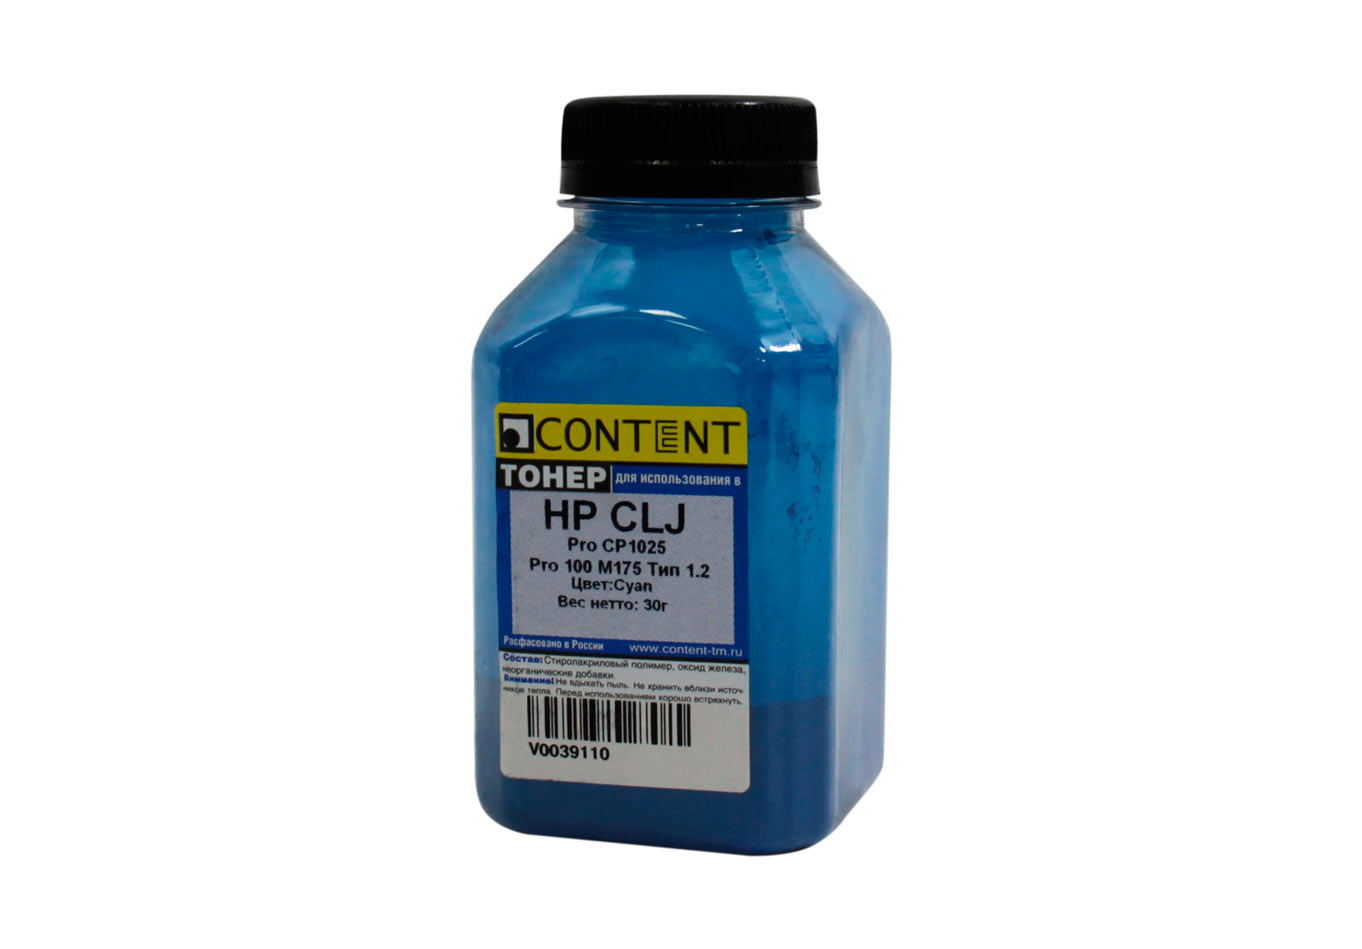 Тонер совместимый  E2E4 Тонер Content Тип 1.2, бутыль 30 г, голубой, совместимый для CLJ Pro CP1025, Pro 100 M175 (V0039110)